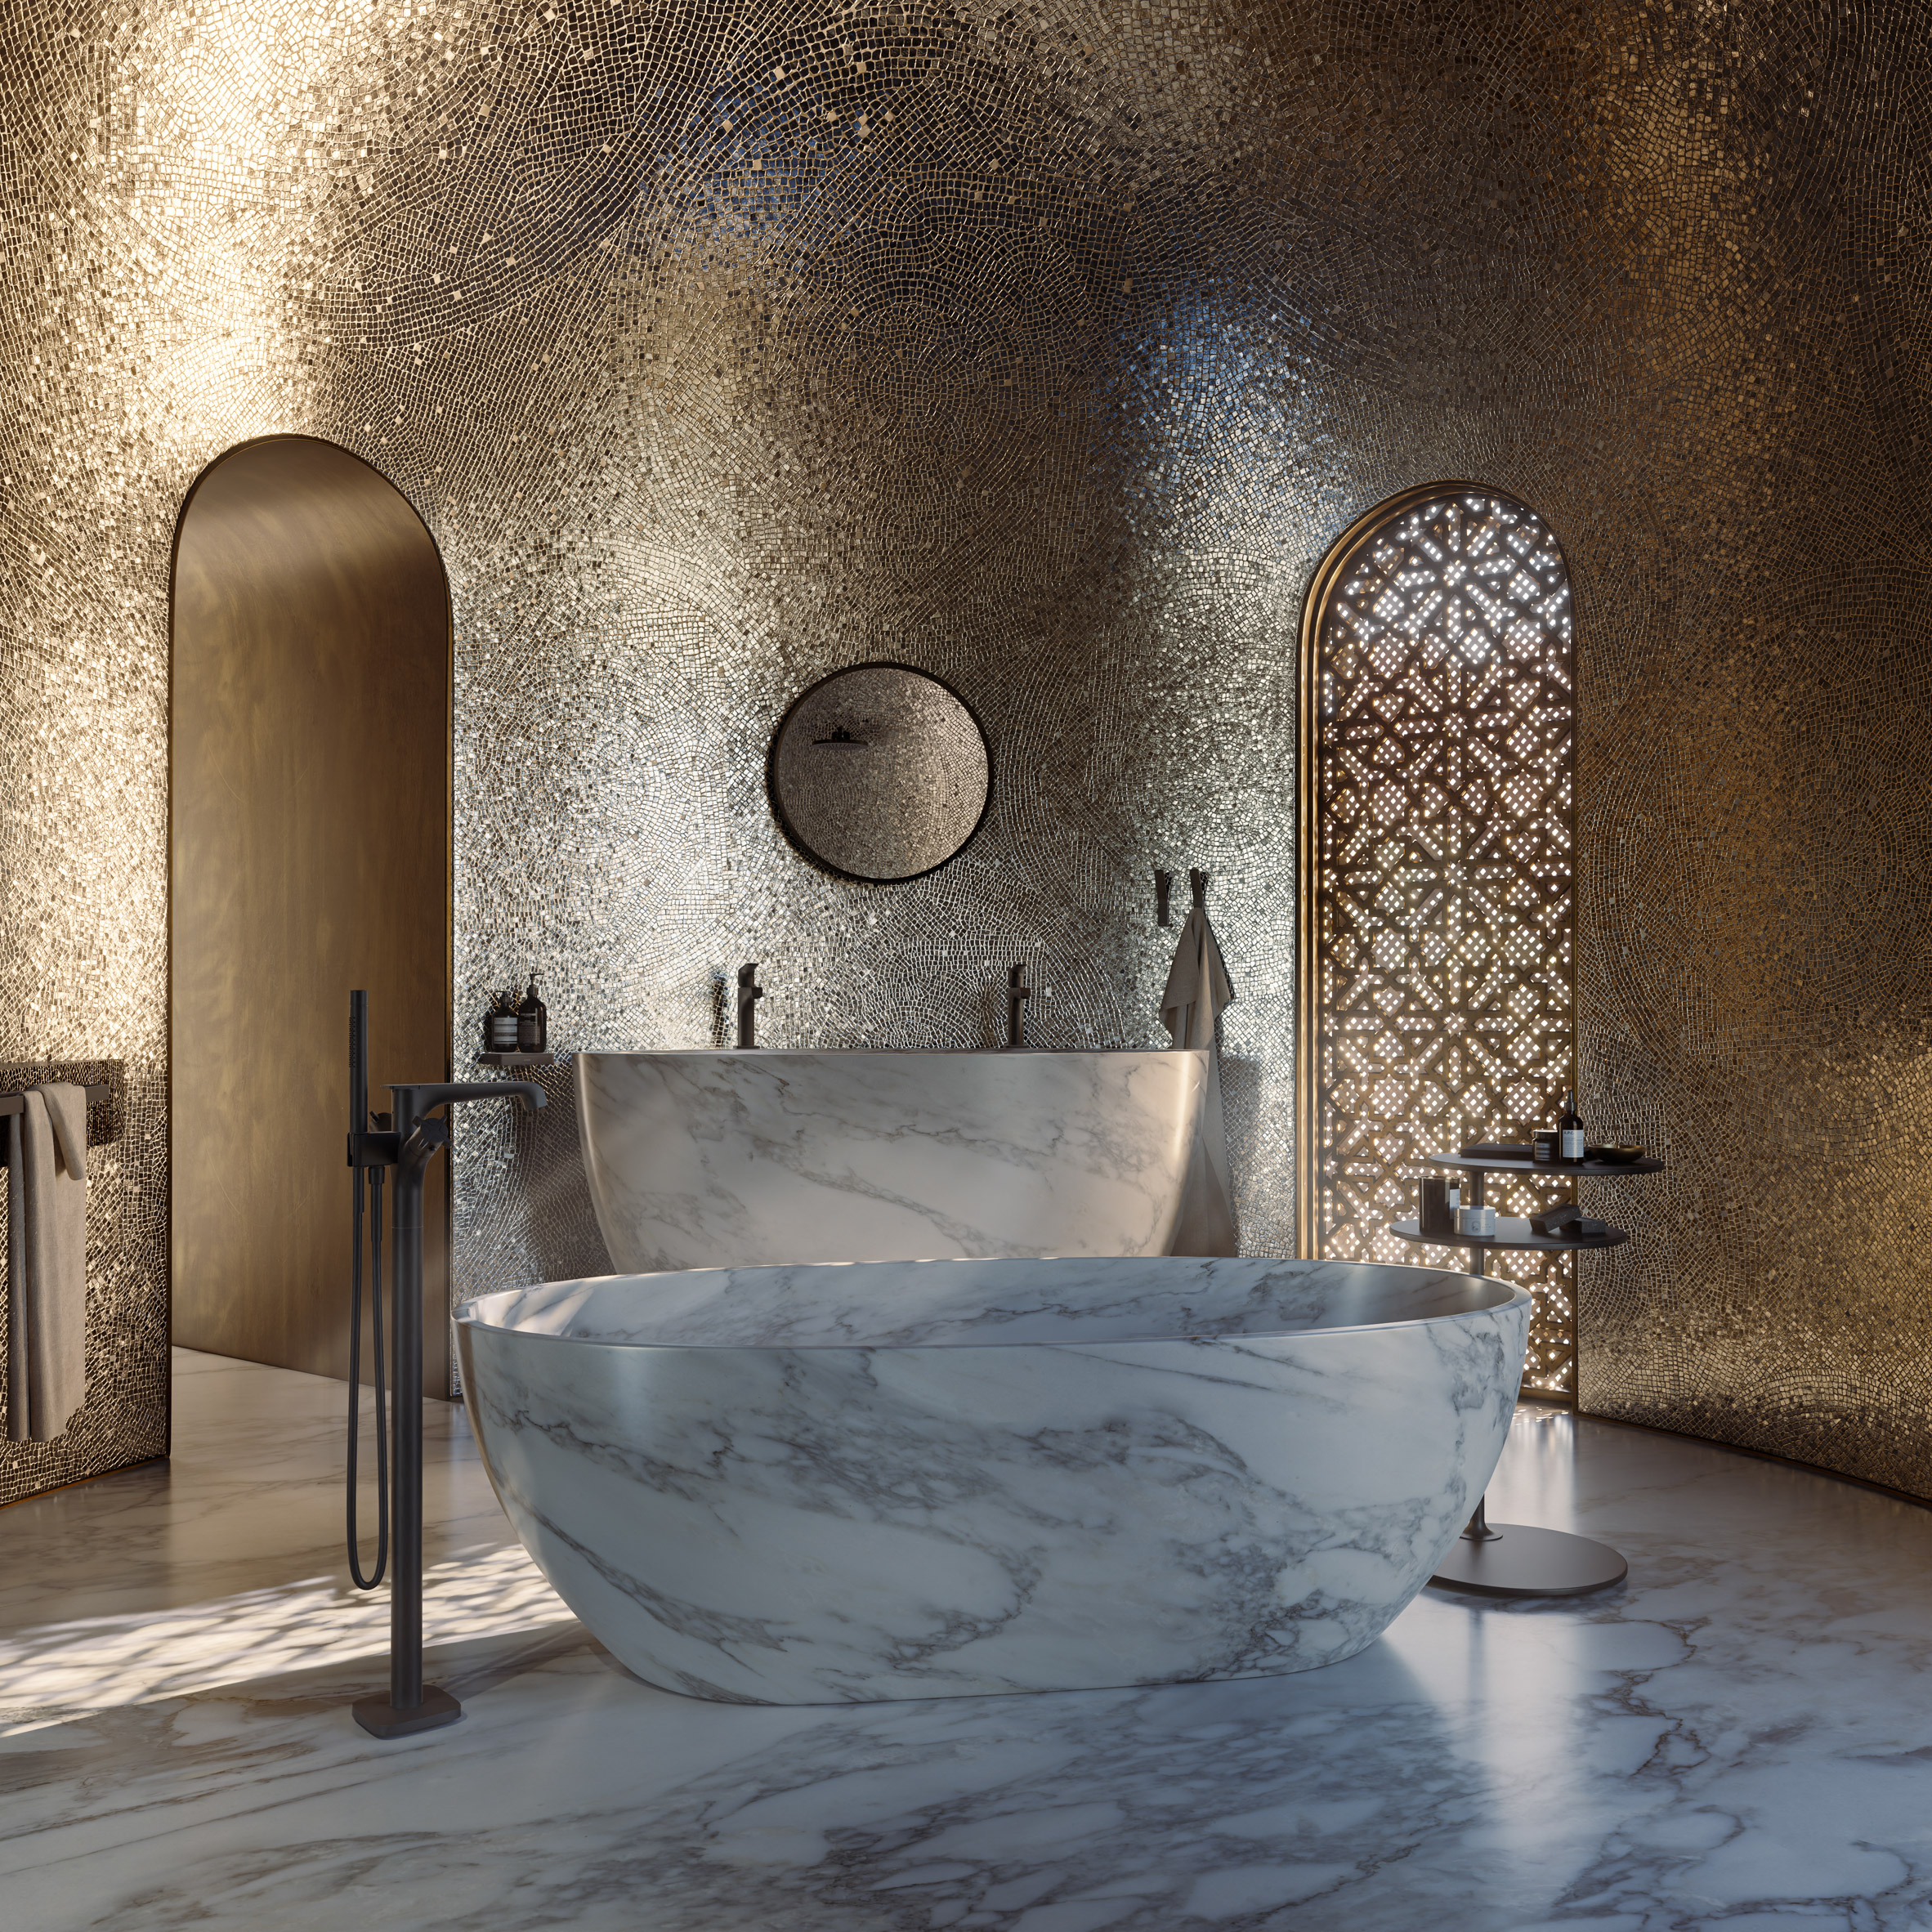 Marble Hadi Teherani cupola bathroom concept for Axor